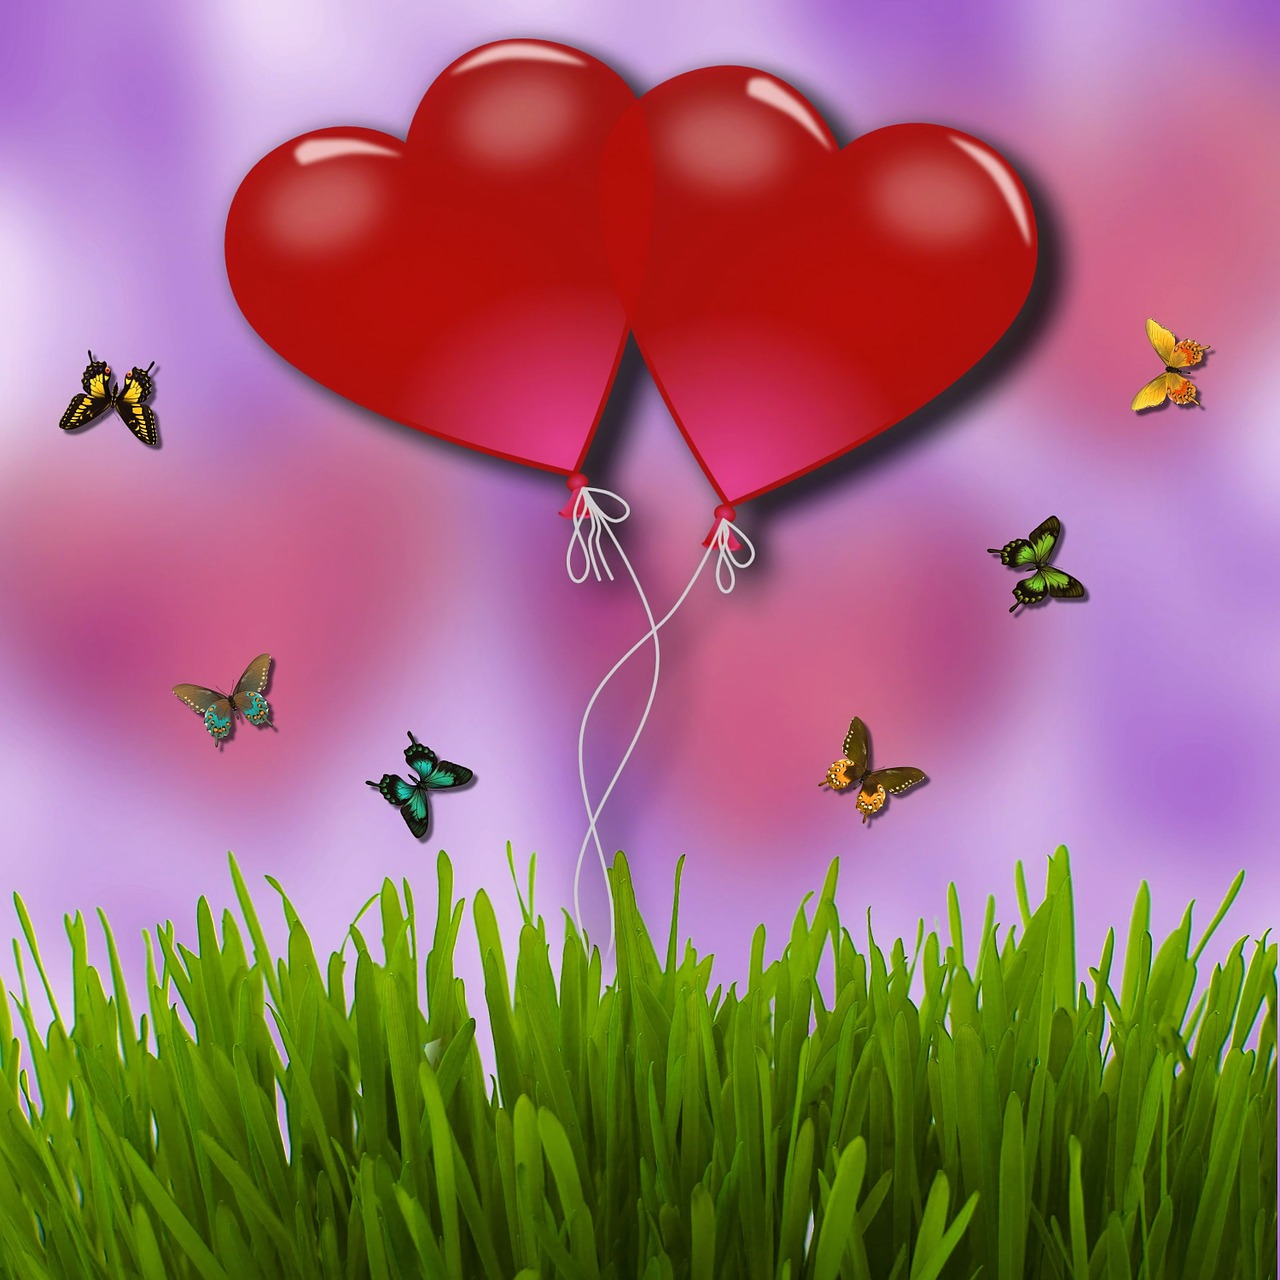 heart butterfly balloon free photo